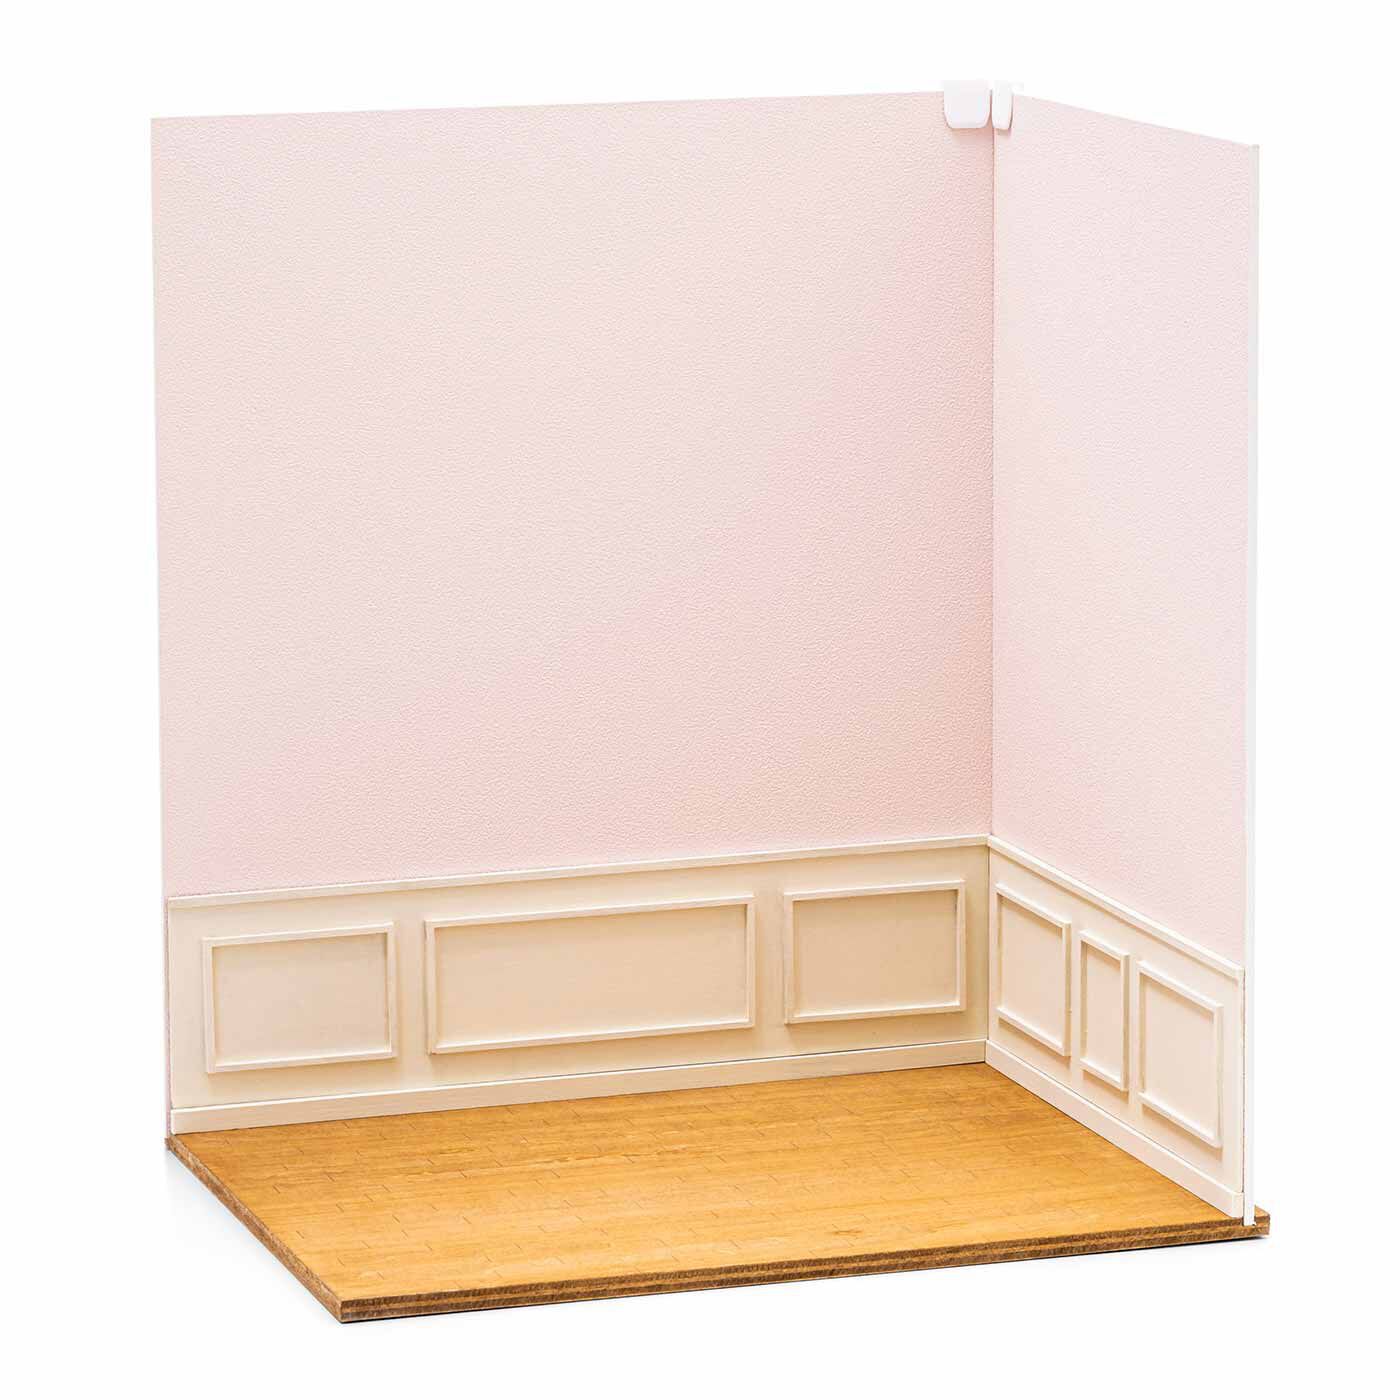 Couturier|1/6サイズドールに合う撮影ブース|床板の溝に壁を差し込み、上部をコーナークリップで固定すればブース完成。 壁はピンクと白の便利な2-WAY仕様。(ピンク）